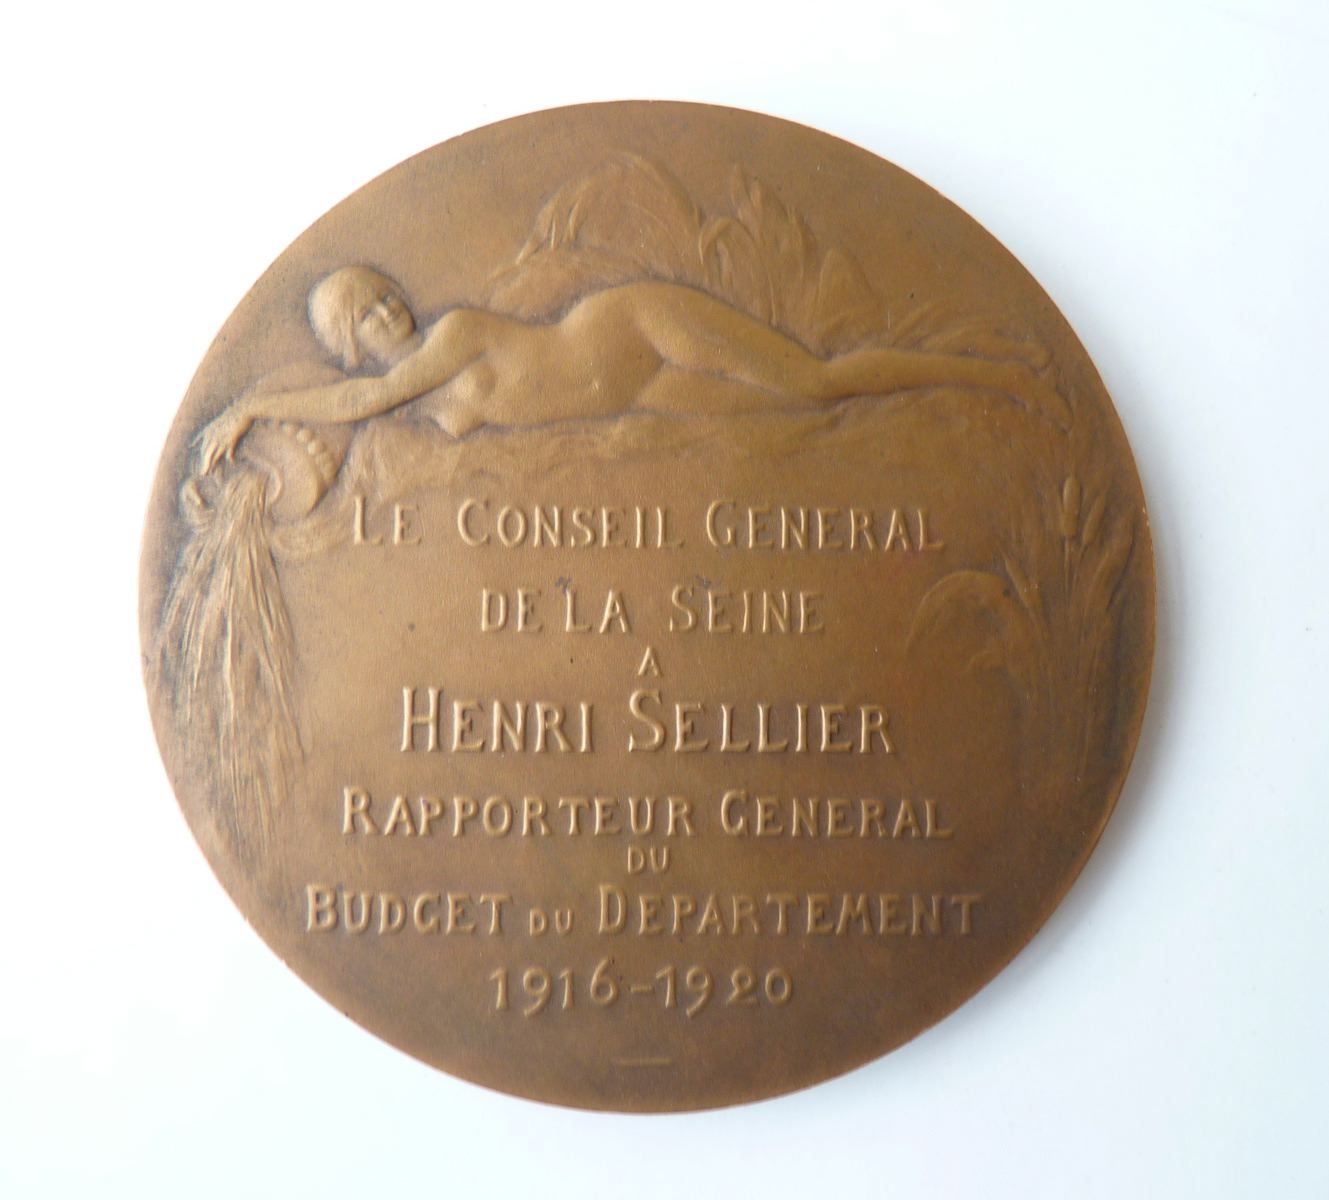 Henri Sellier